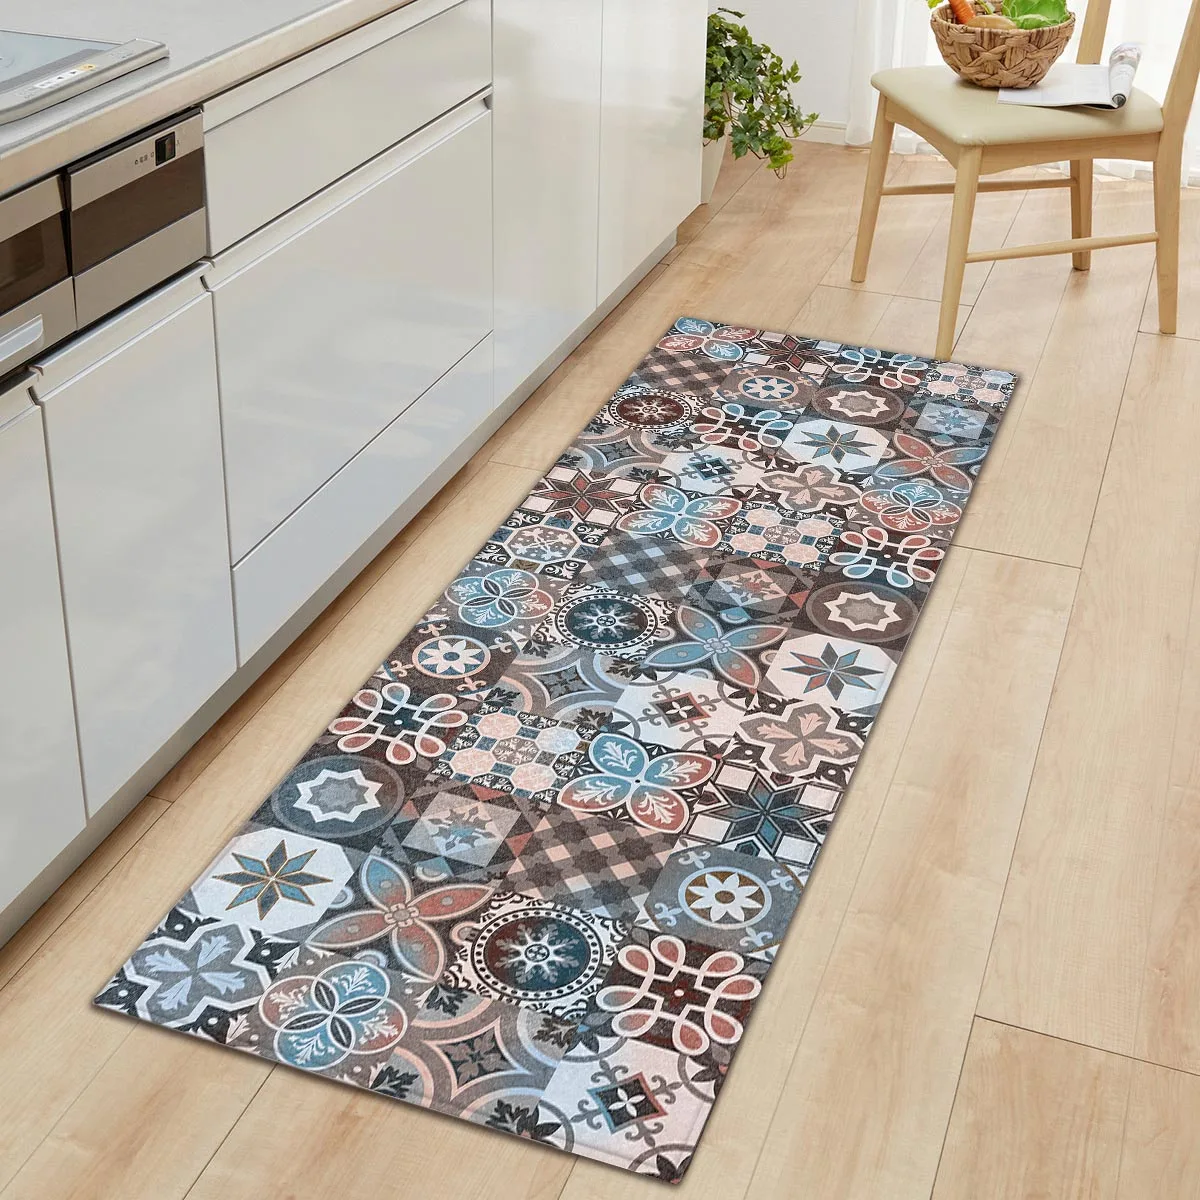 

Tiles Pattern Home Bath Mat Soft Entrance Door Mat Non-slip Kitchen Carpet Home Flannel Rugs for Living Room Kitchen Bedroom